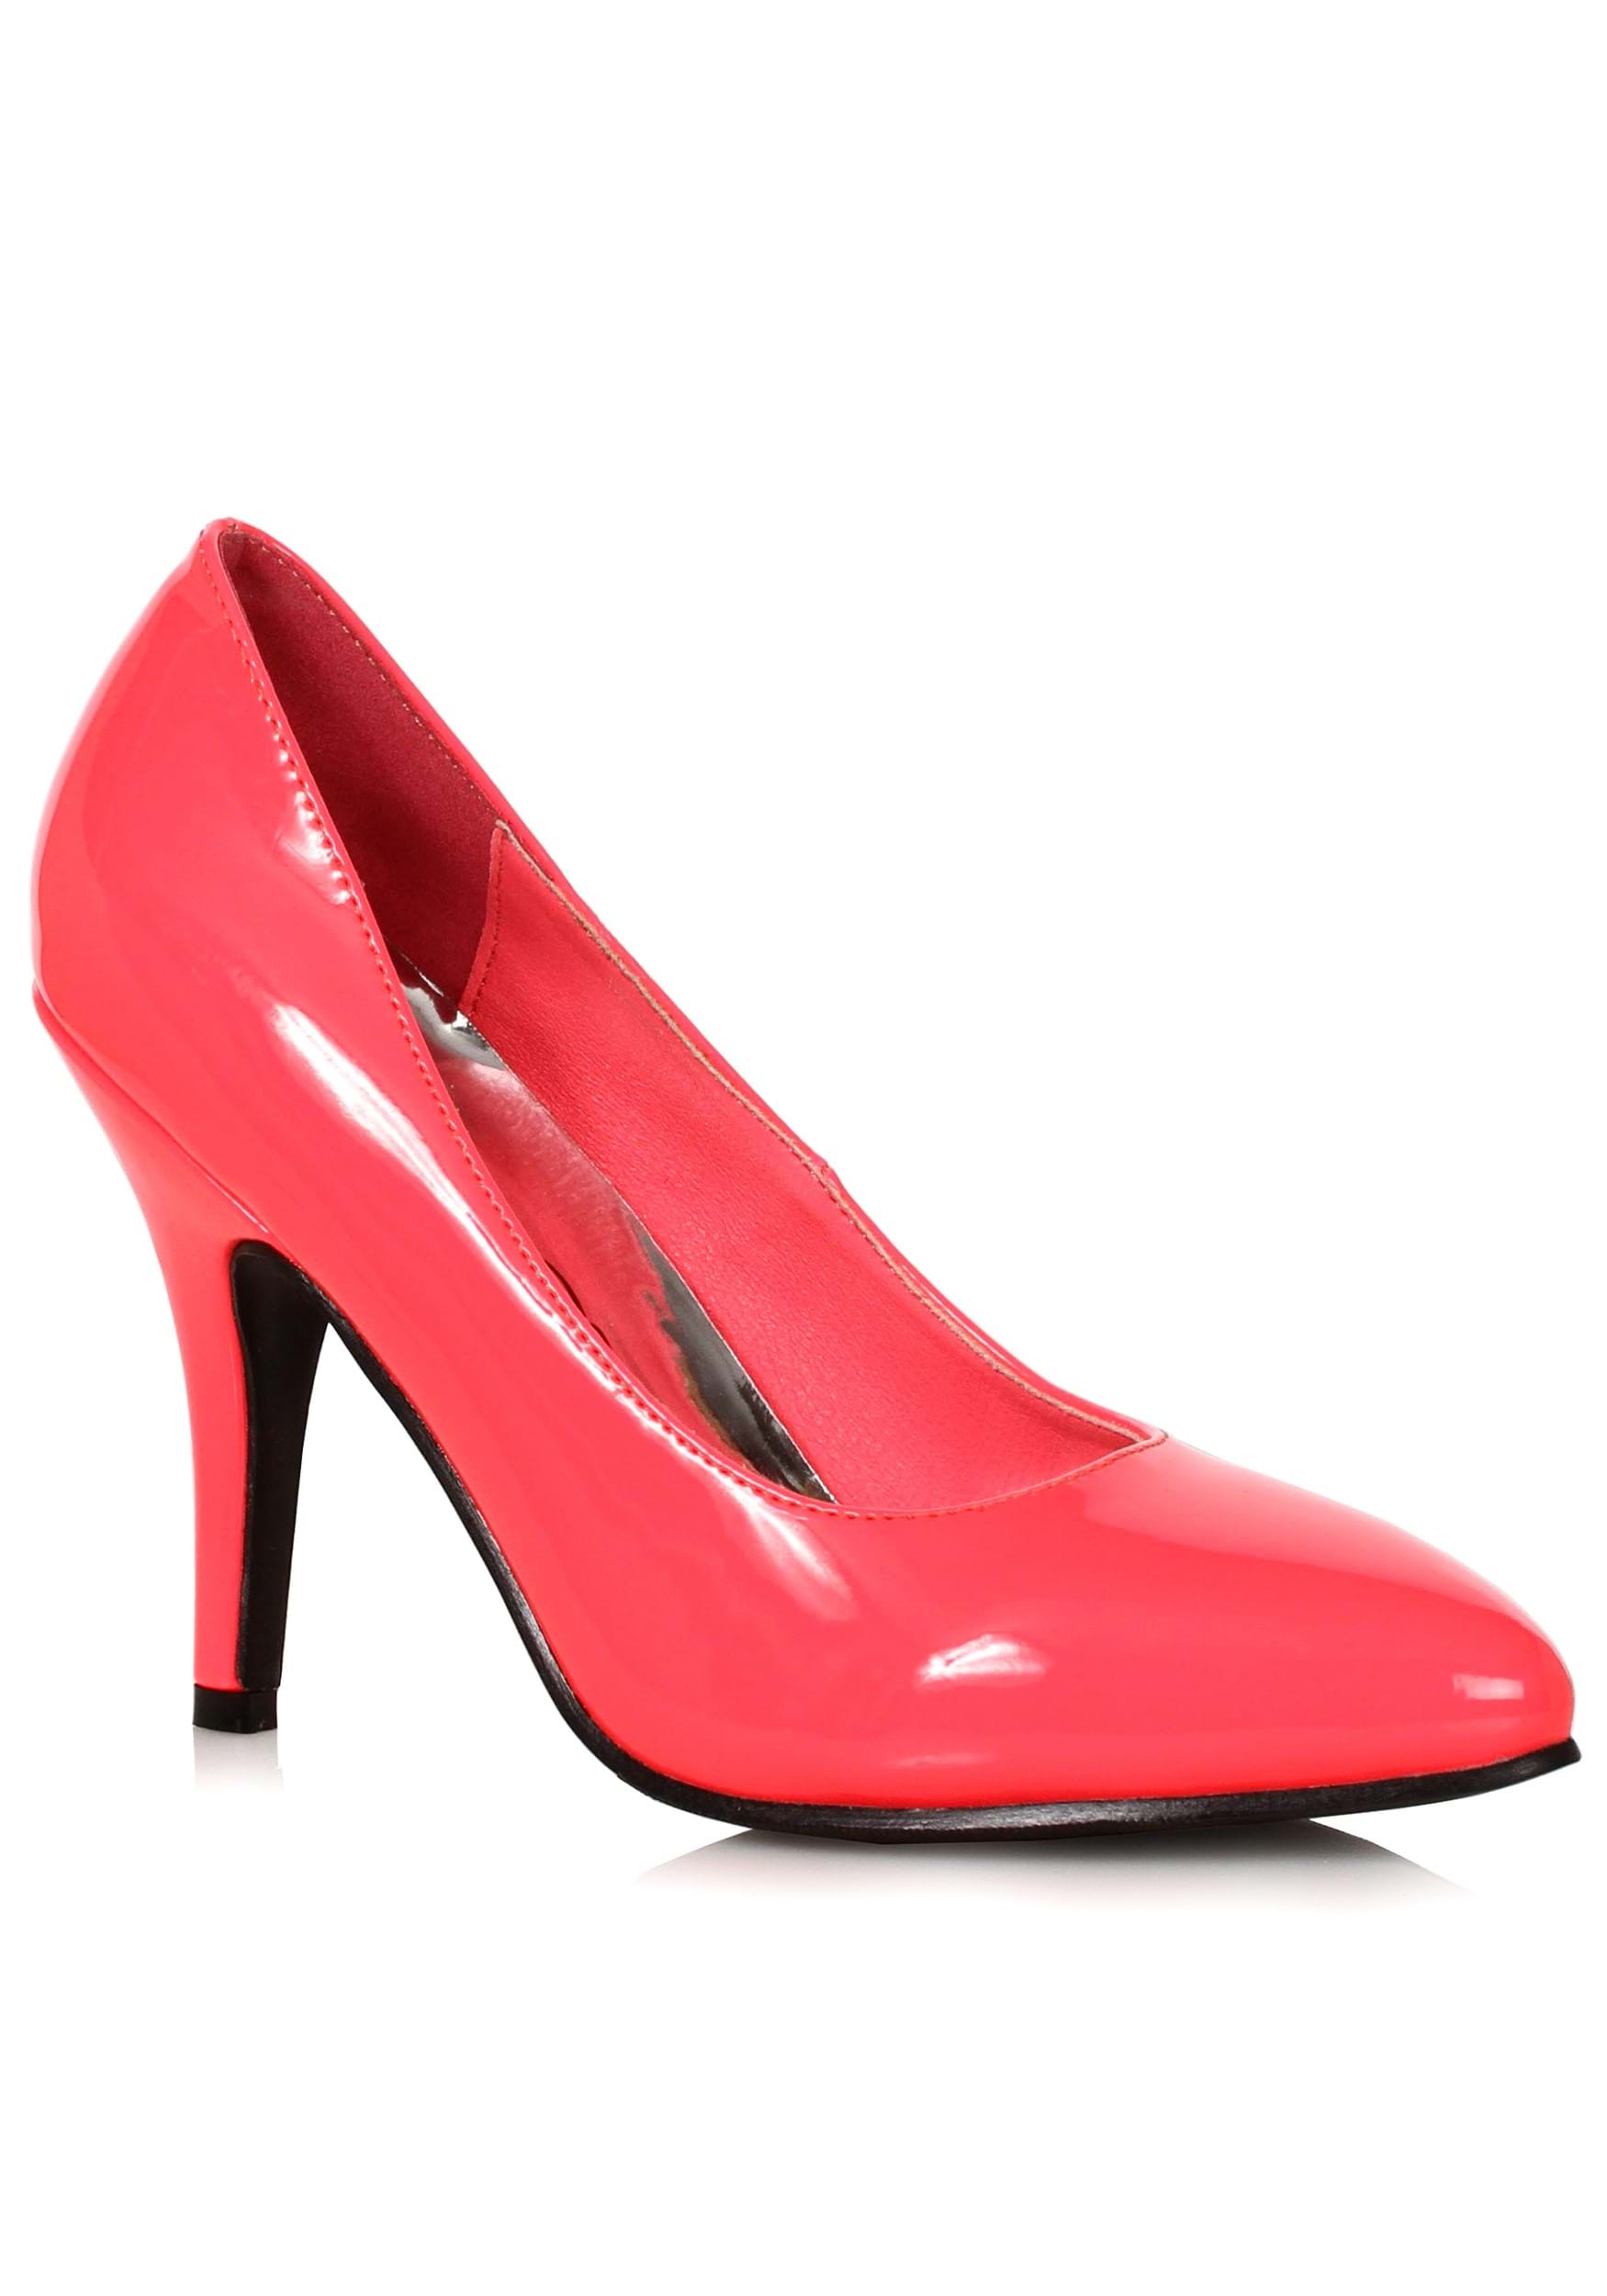 Women Platform Pumps Round Toe Slim High Heel Fuchsia Shoes Woman Plus Size  12.5 | eBay